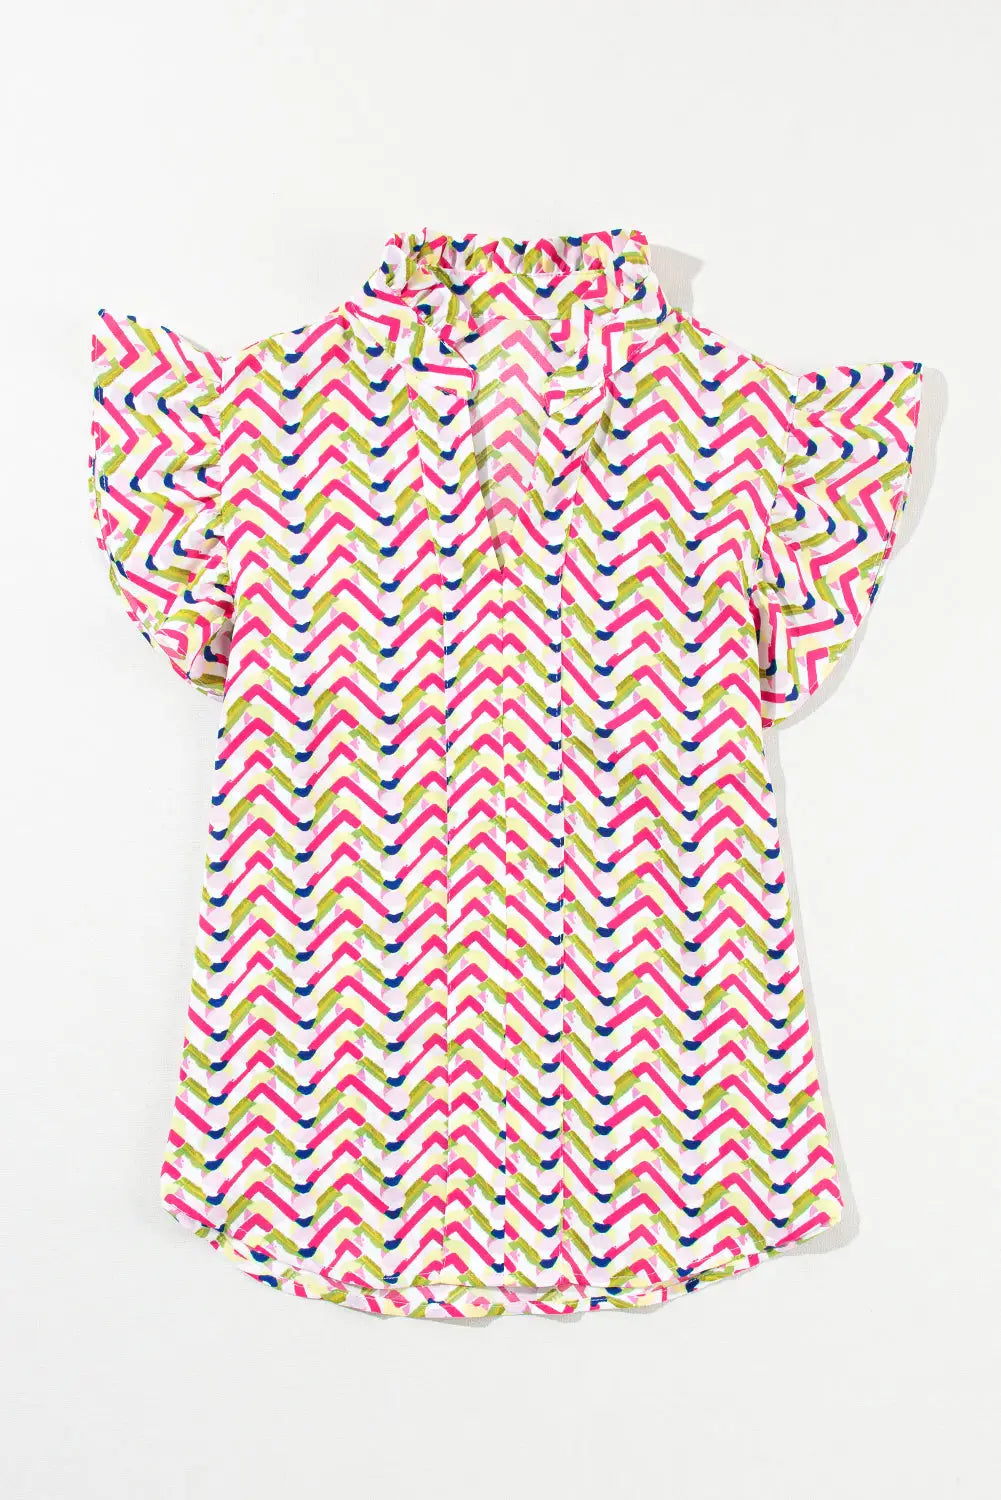 Chevron print ruffled sleeve blouse - tops/blouses & shirts